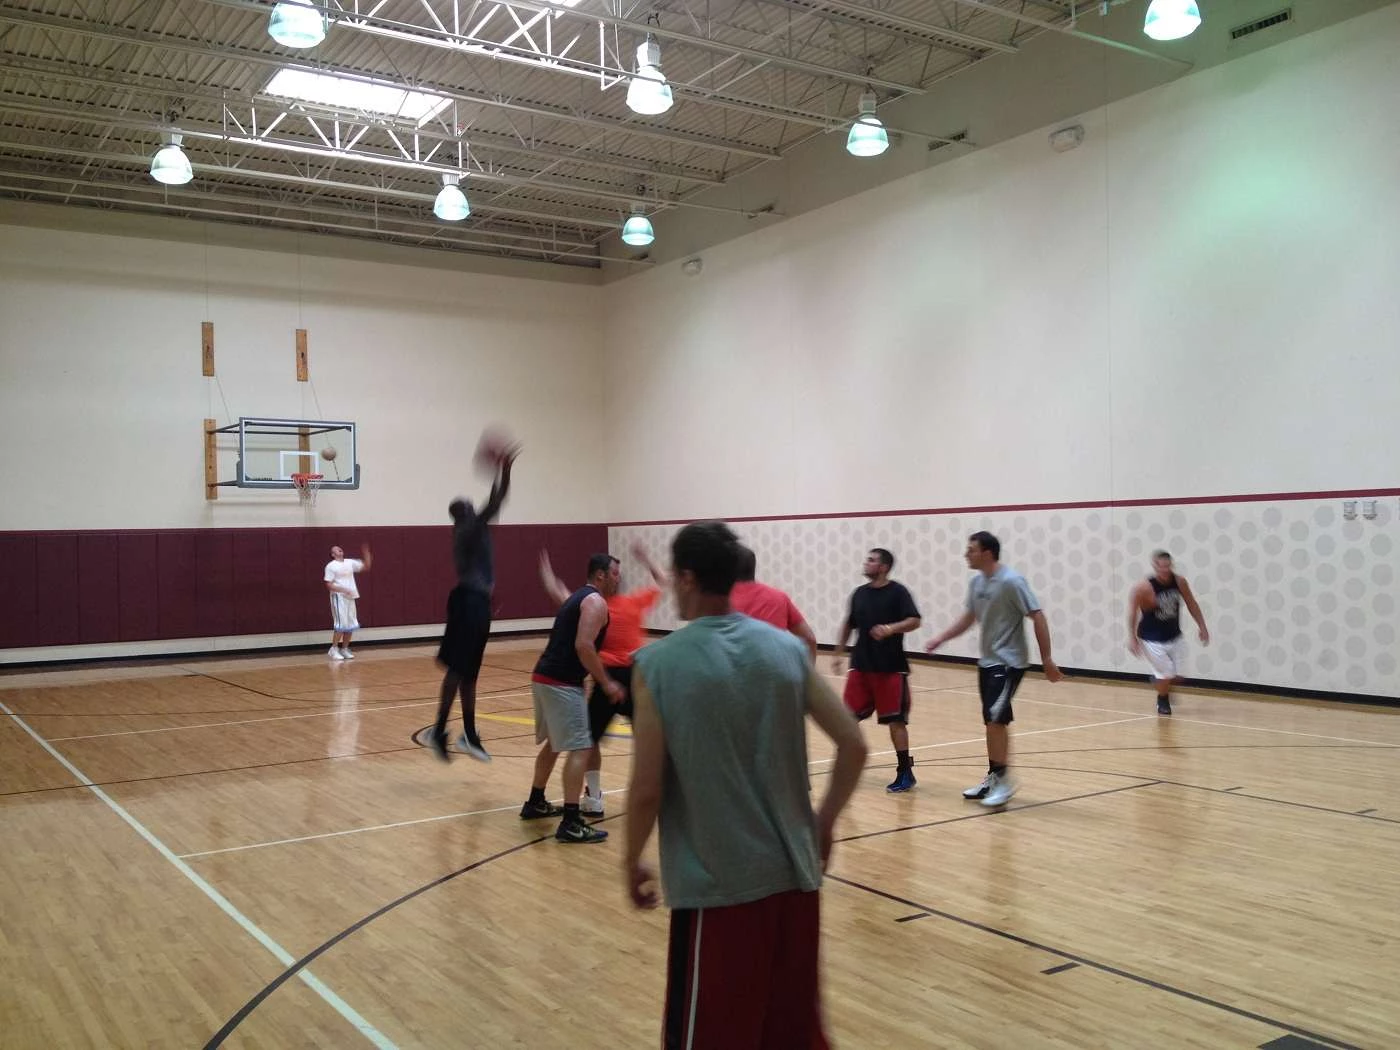 Bridgeville, PA Basketball Court: LA Fitness - Courts of the World